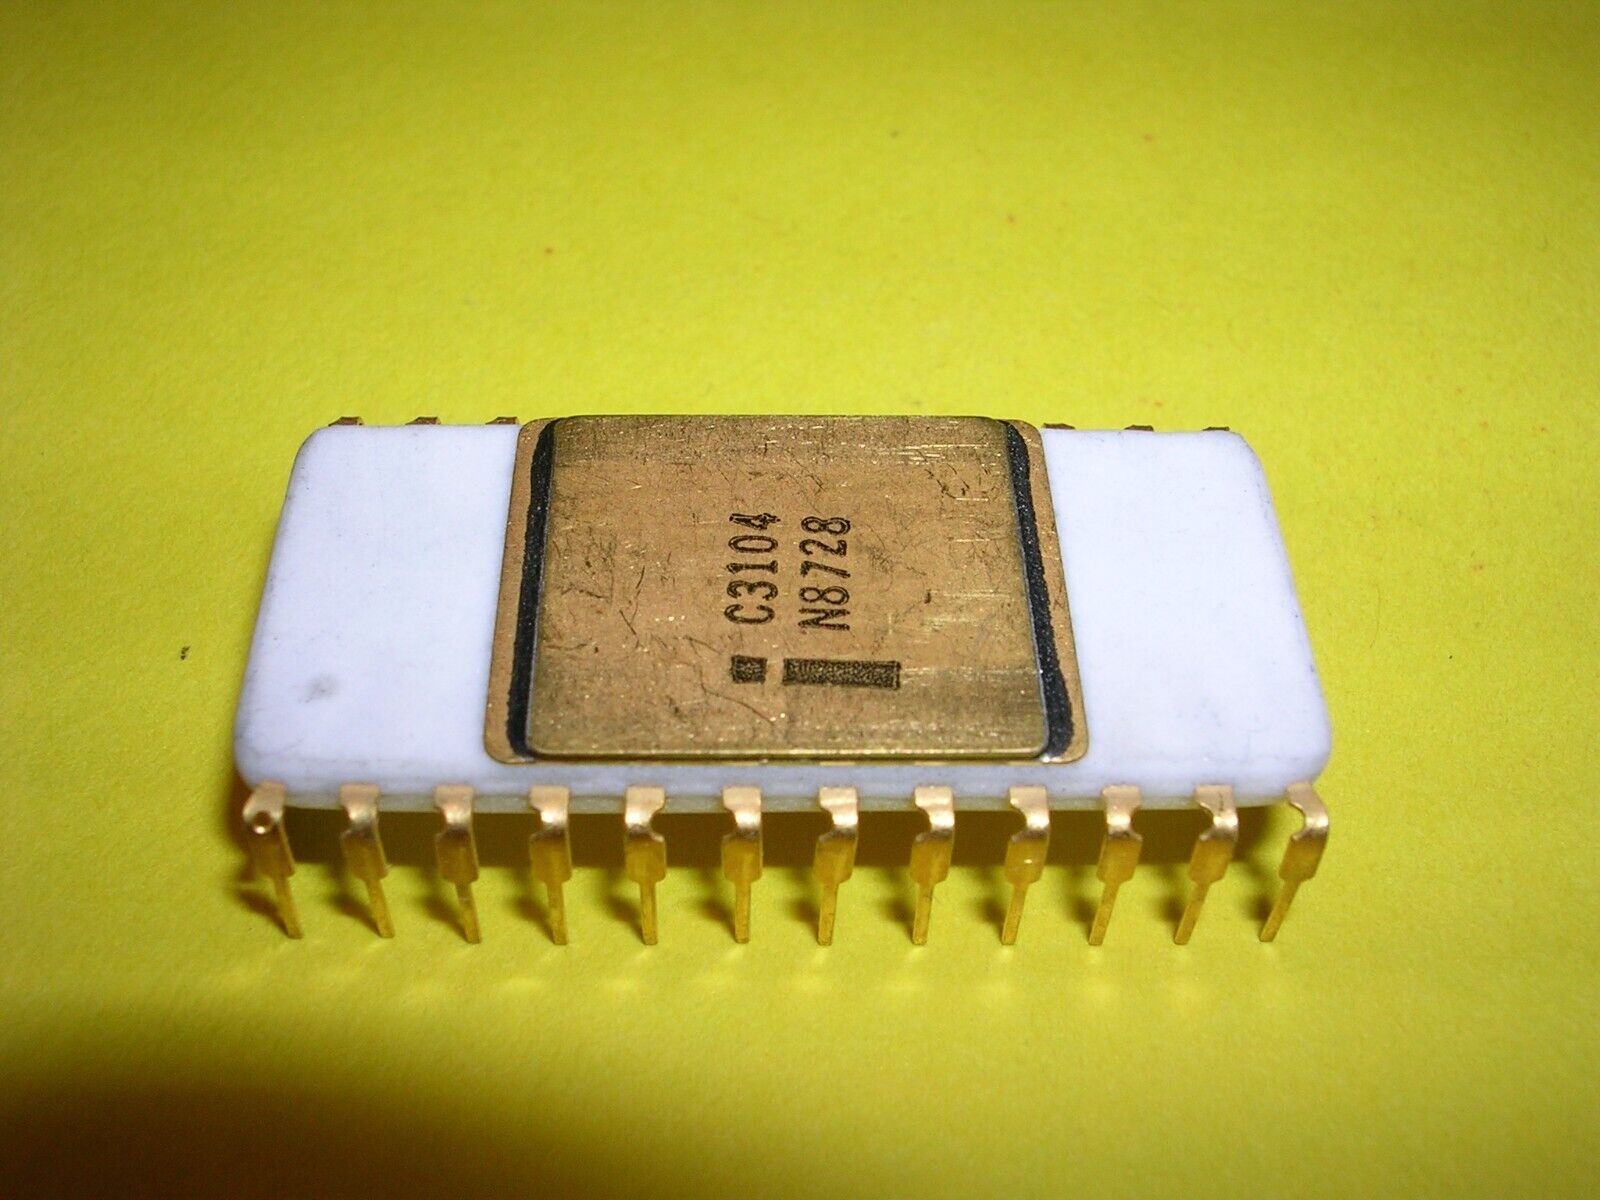 Intel C3104 RAM Chip (Type 2), Very Early Variety, Very Rare